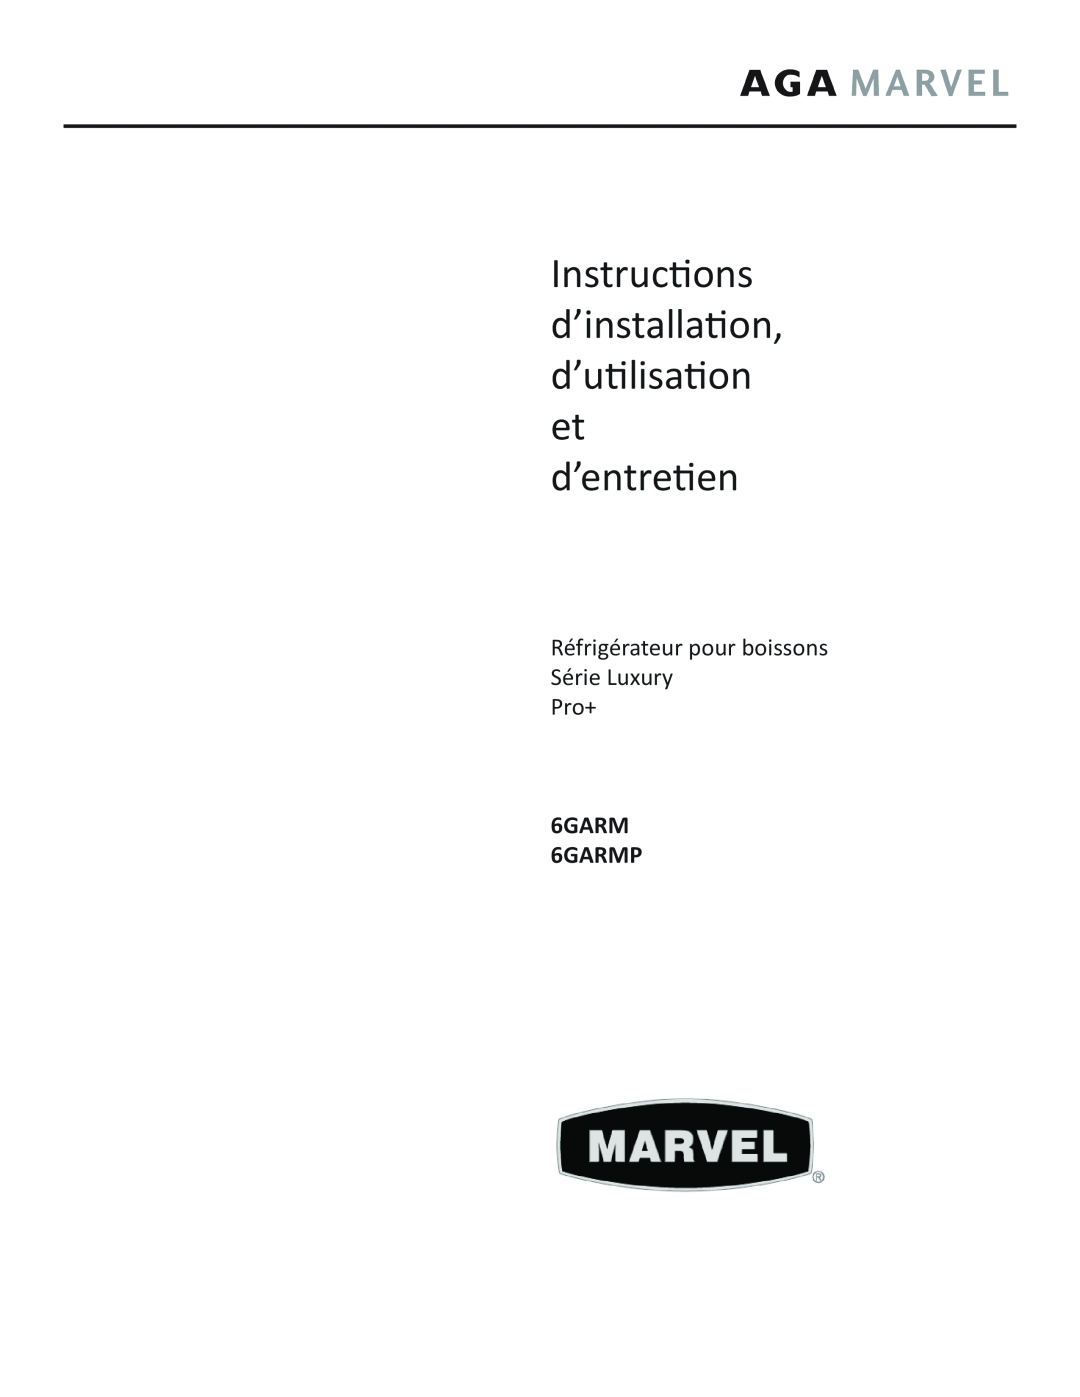 Marvel Group manual Instructions d’installation, d’utilisation et d’entretien, 6GARM 6GARMP 